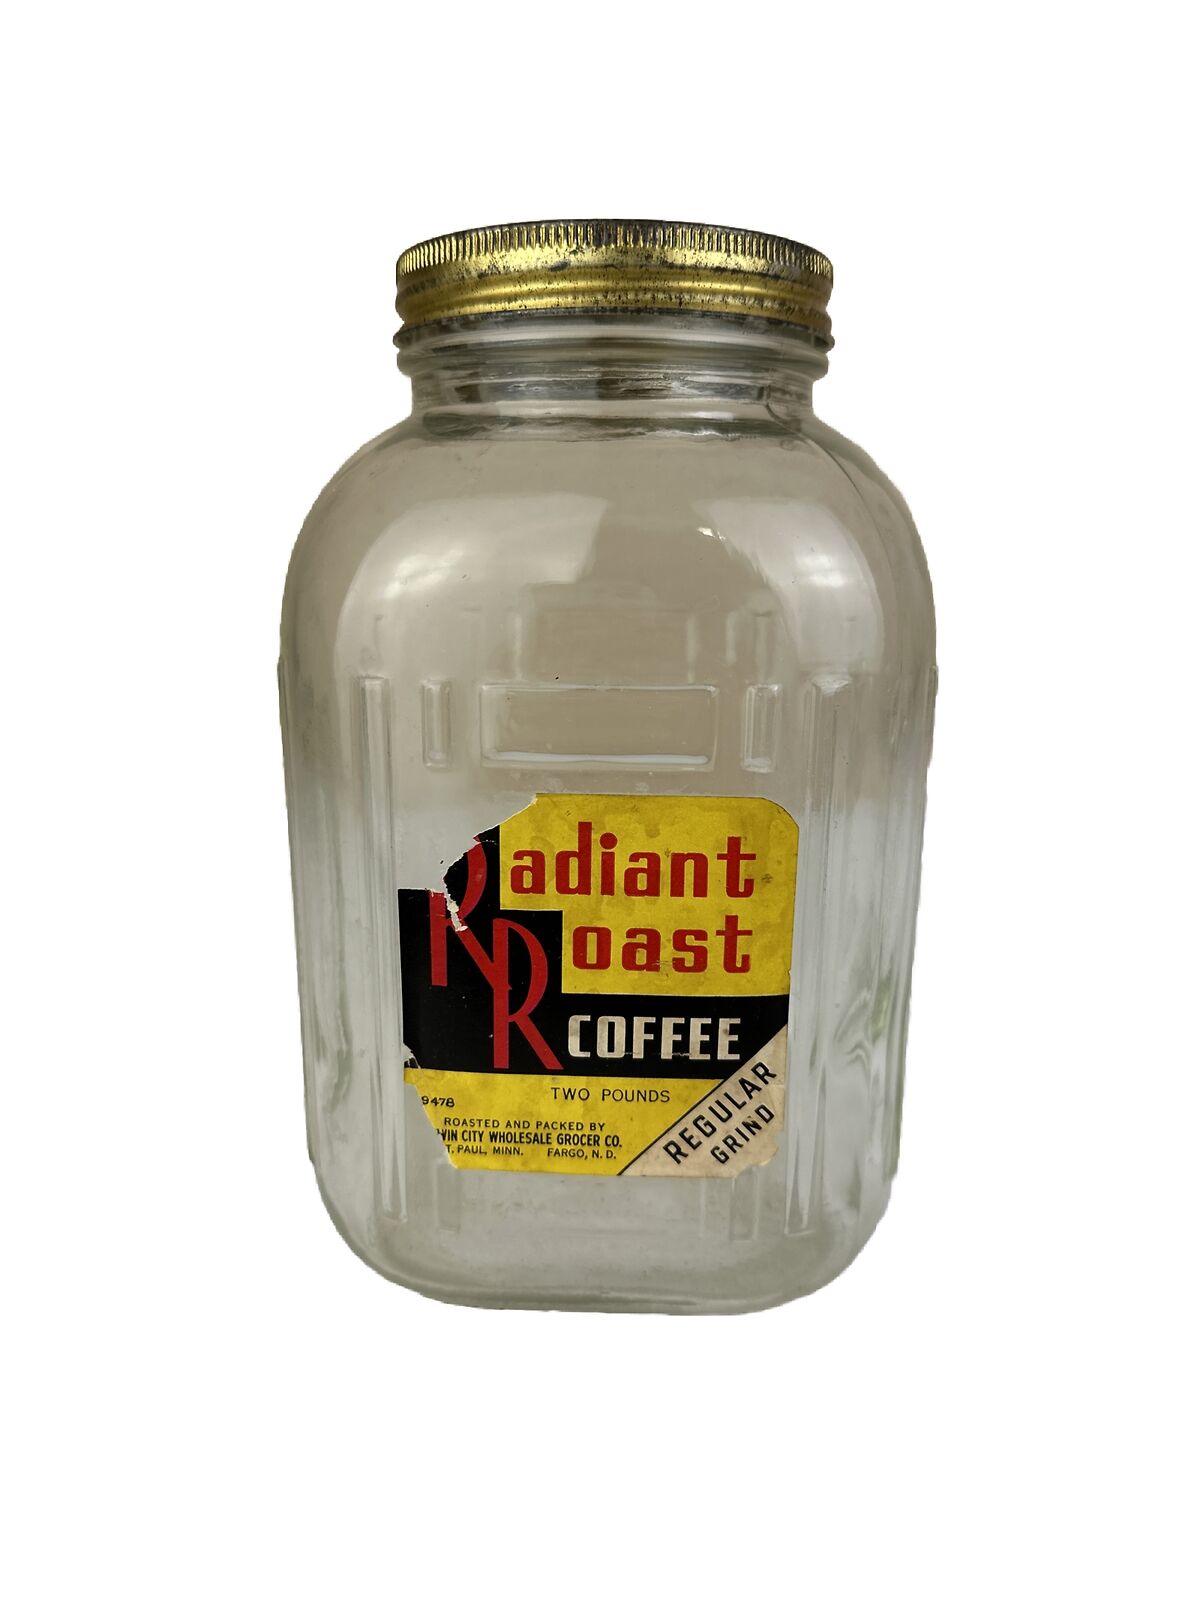 Vtg Radiant Roast Coffee Glass Jar Embossed 1940s Label Farmhouse 2 Lb Size